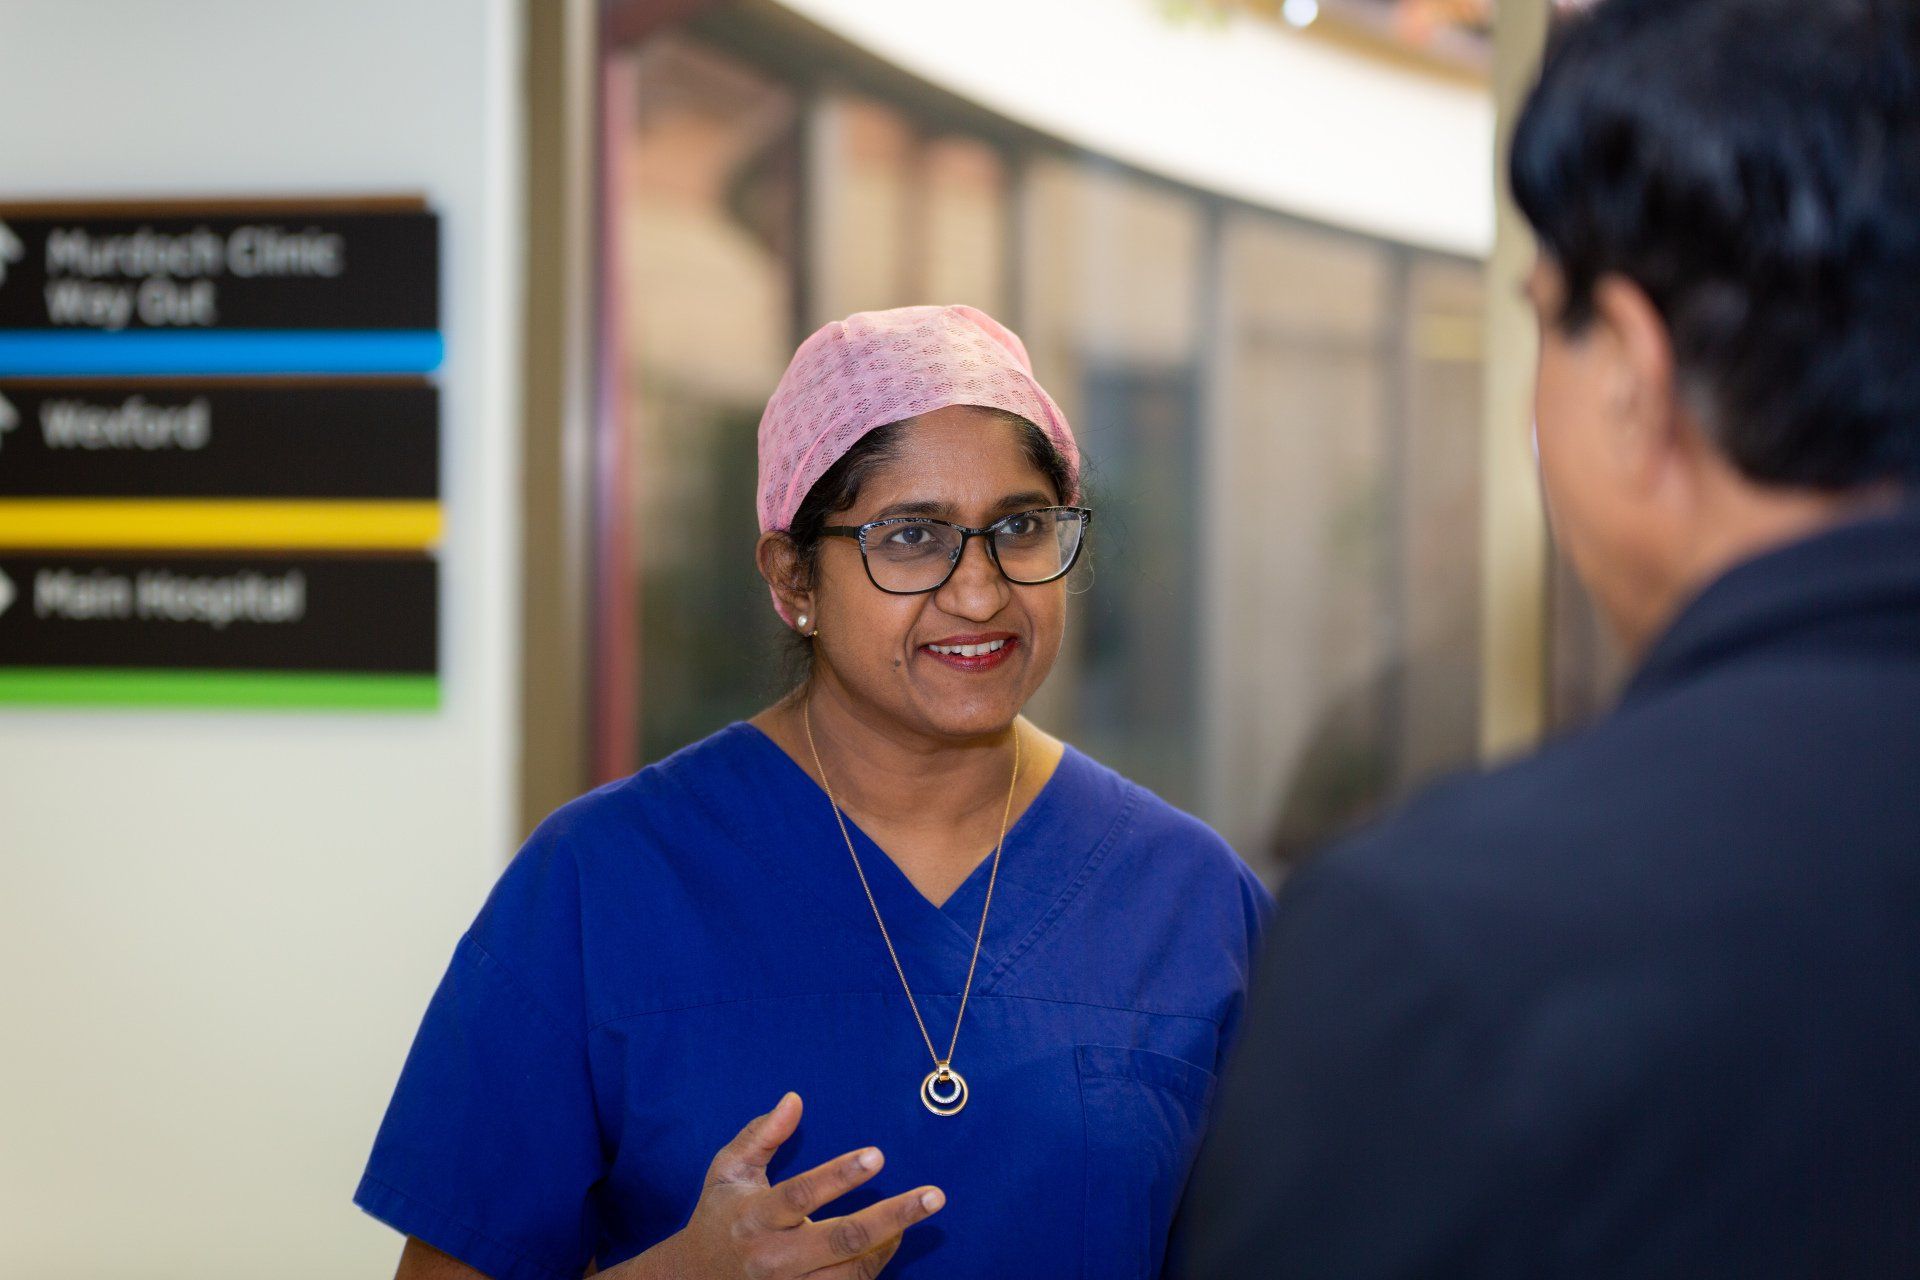 Dr Bindu talking to a patient